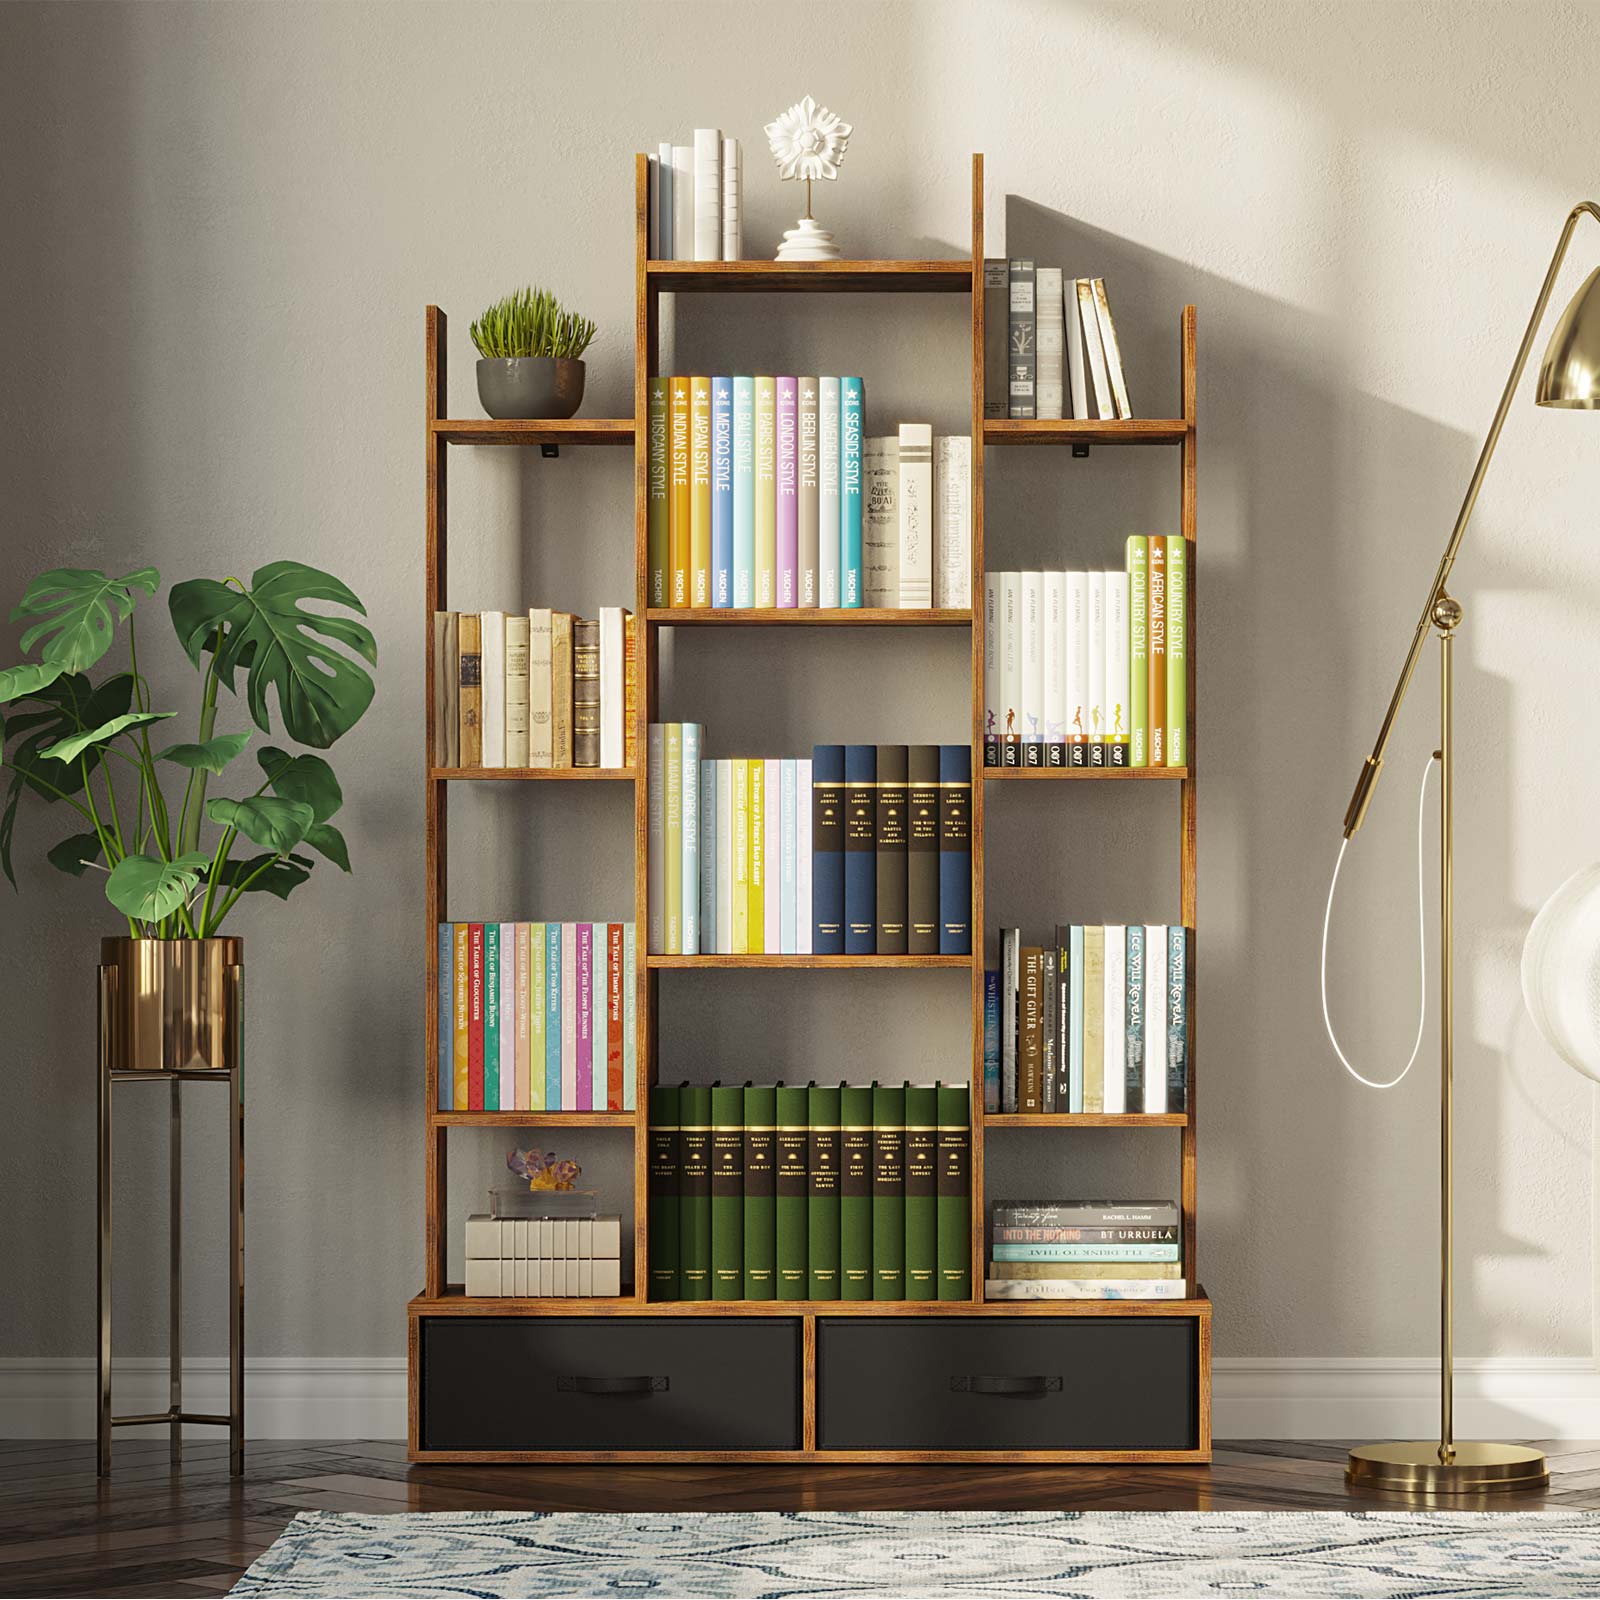 Bookshelf wood with drawers